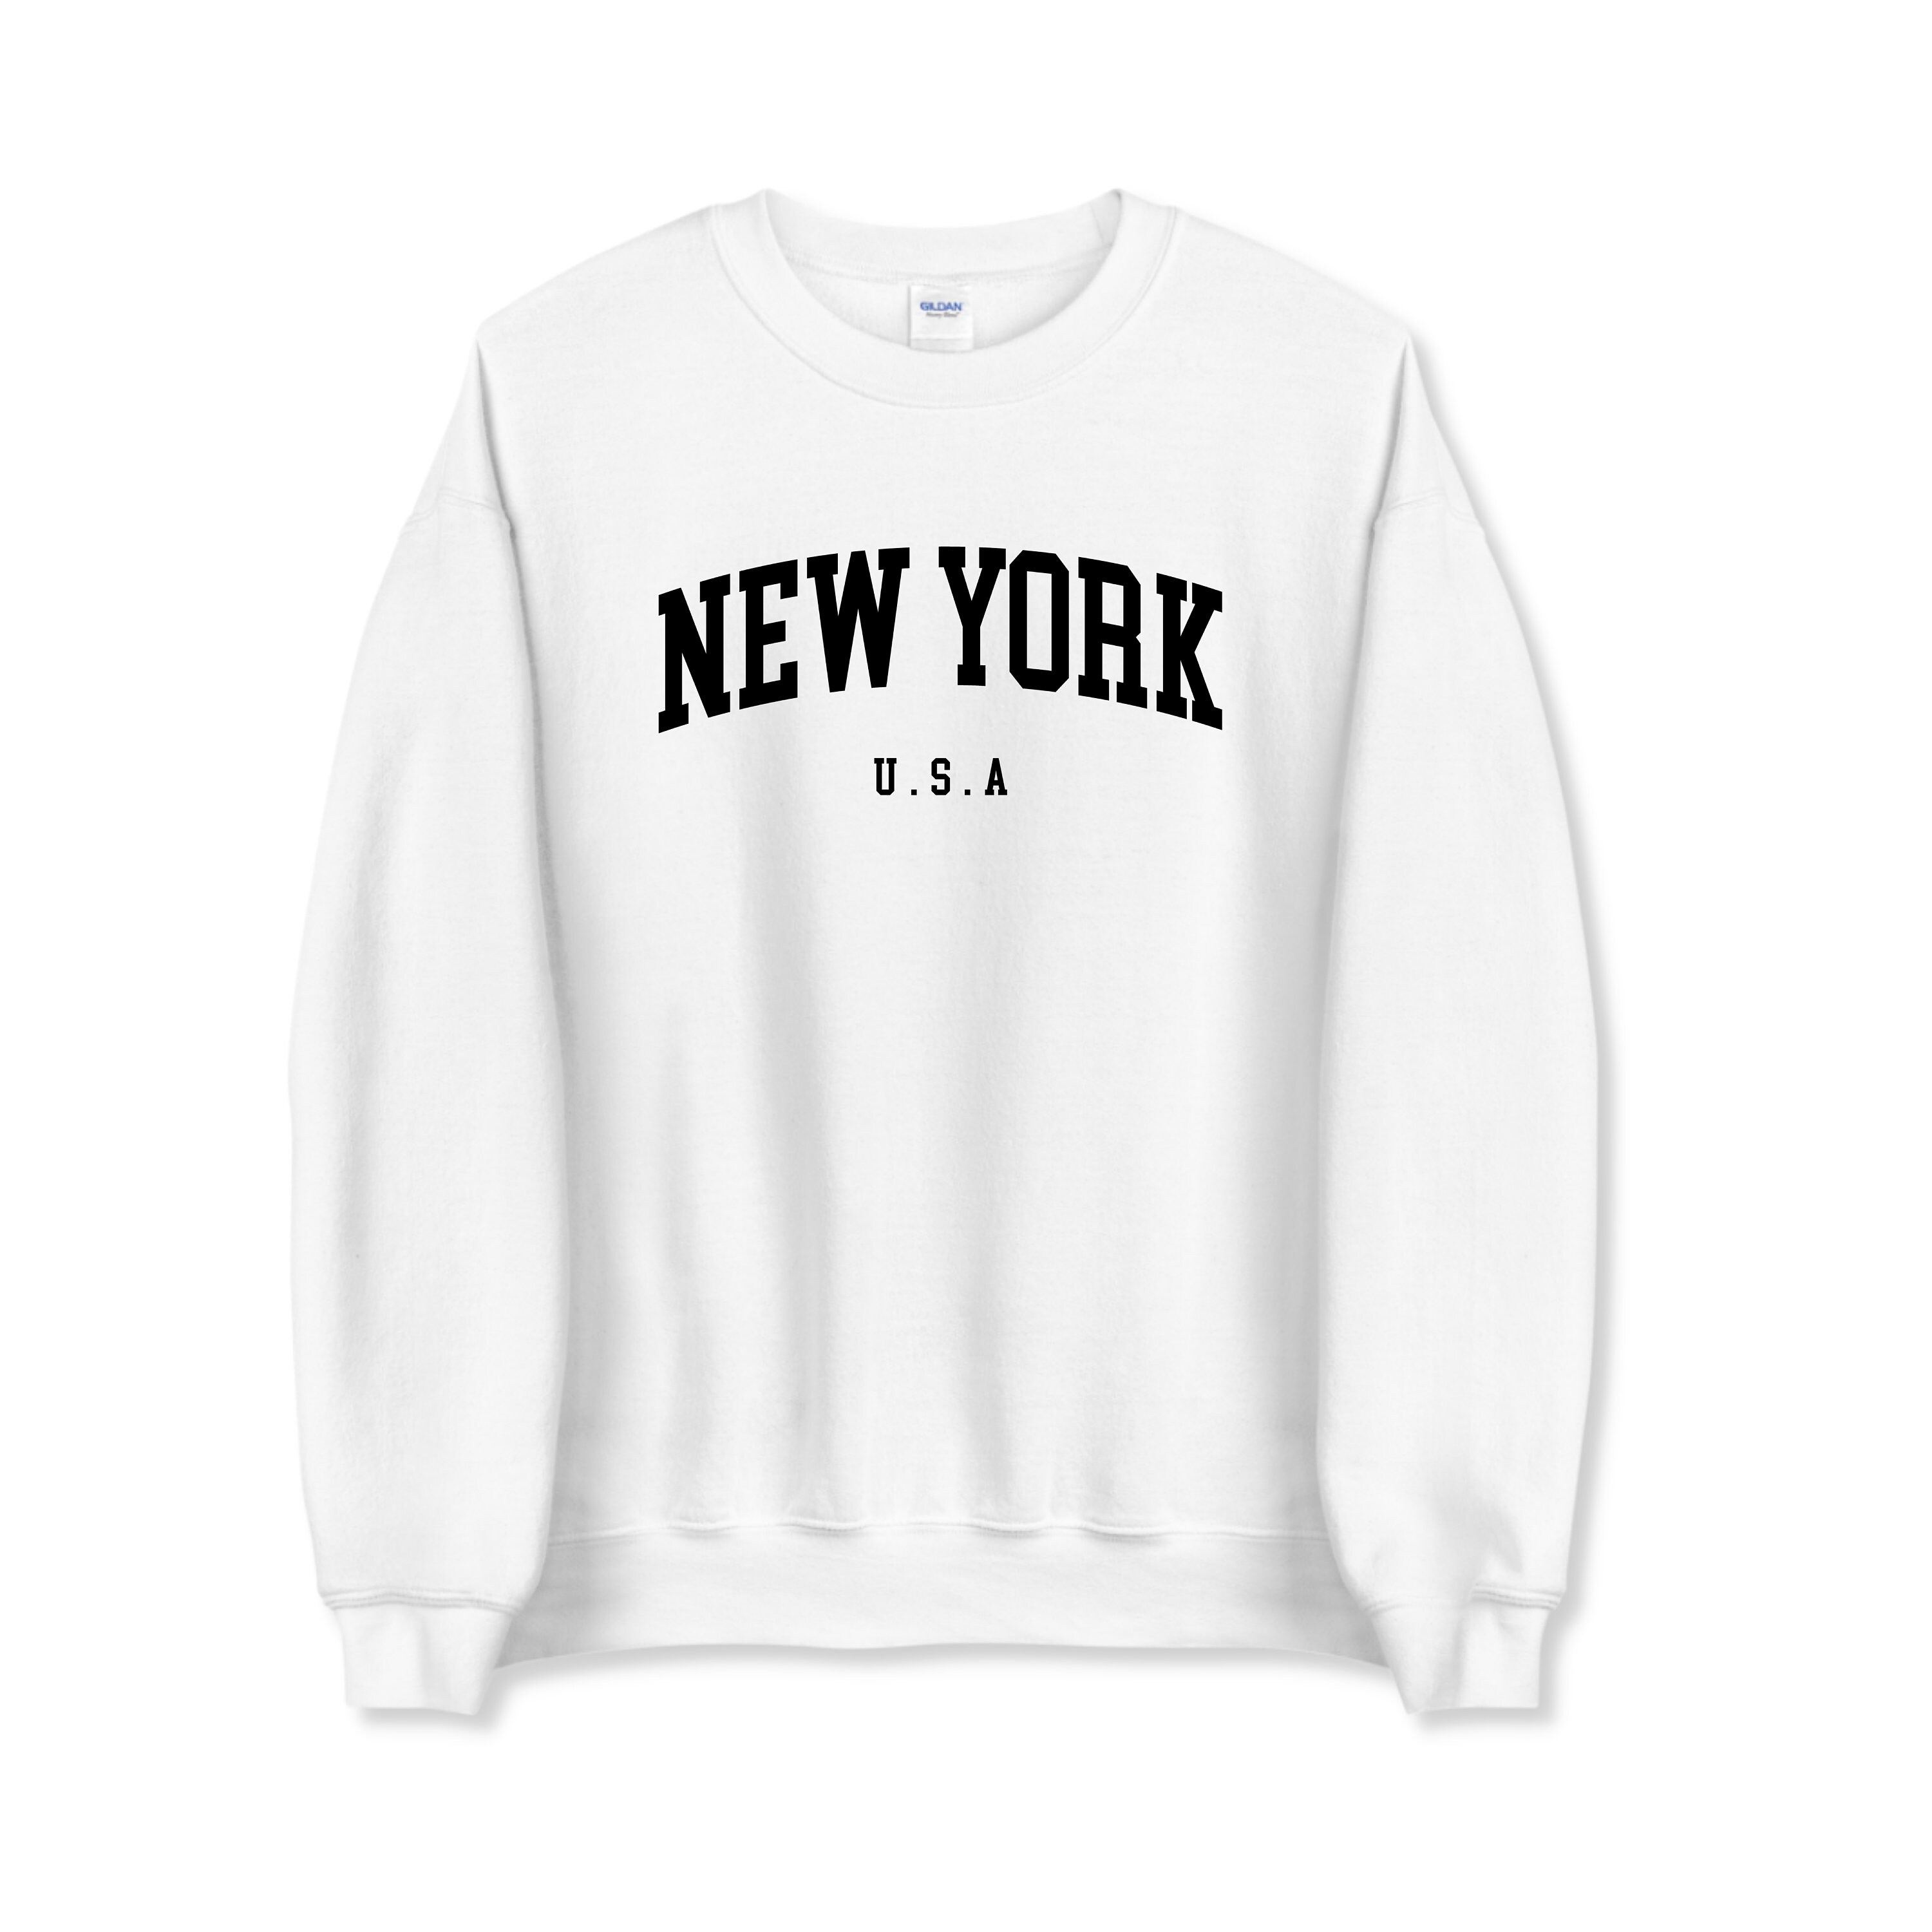 NEW YORK CITY Crewneck in Ash Grey & White Aesthetic Unisex - Etsy